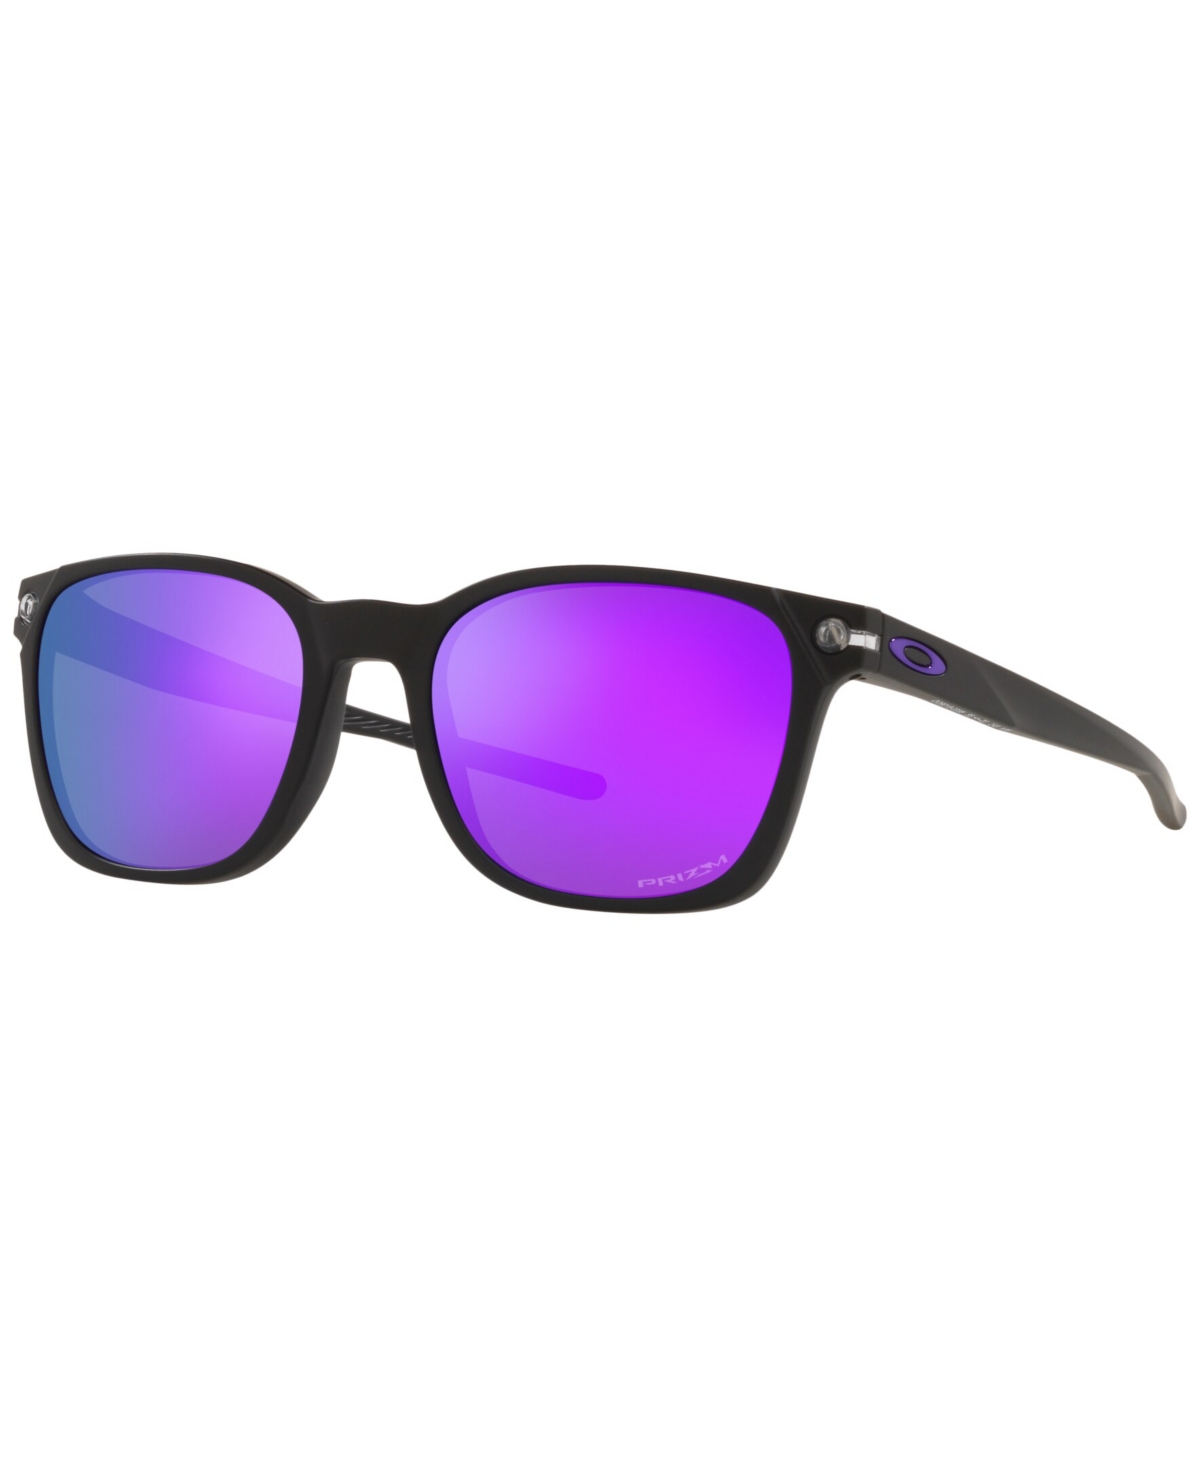 Men's Sunglasses, OO9018 Ojector 55 - Matte Black